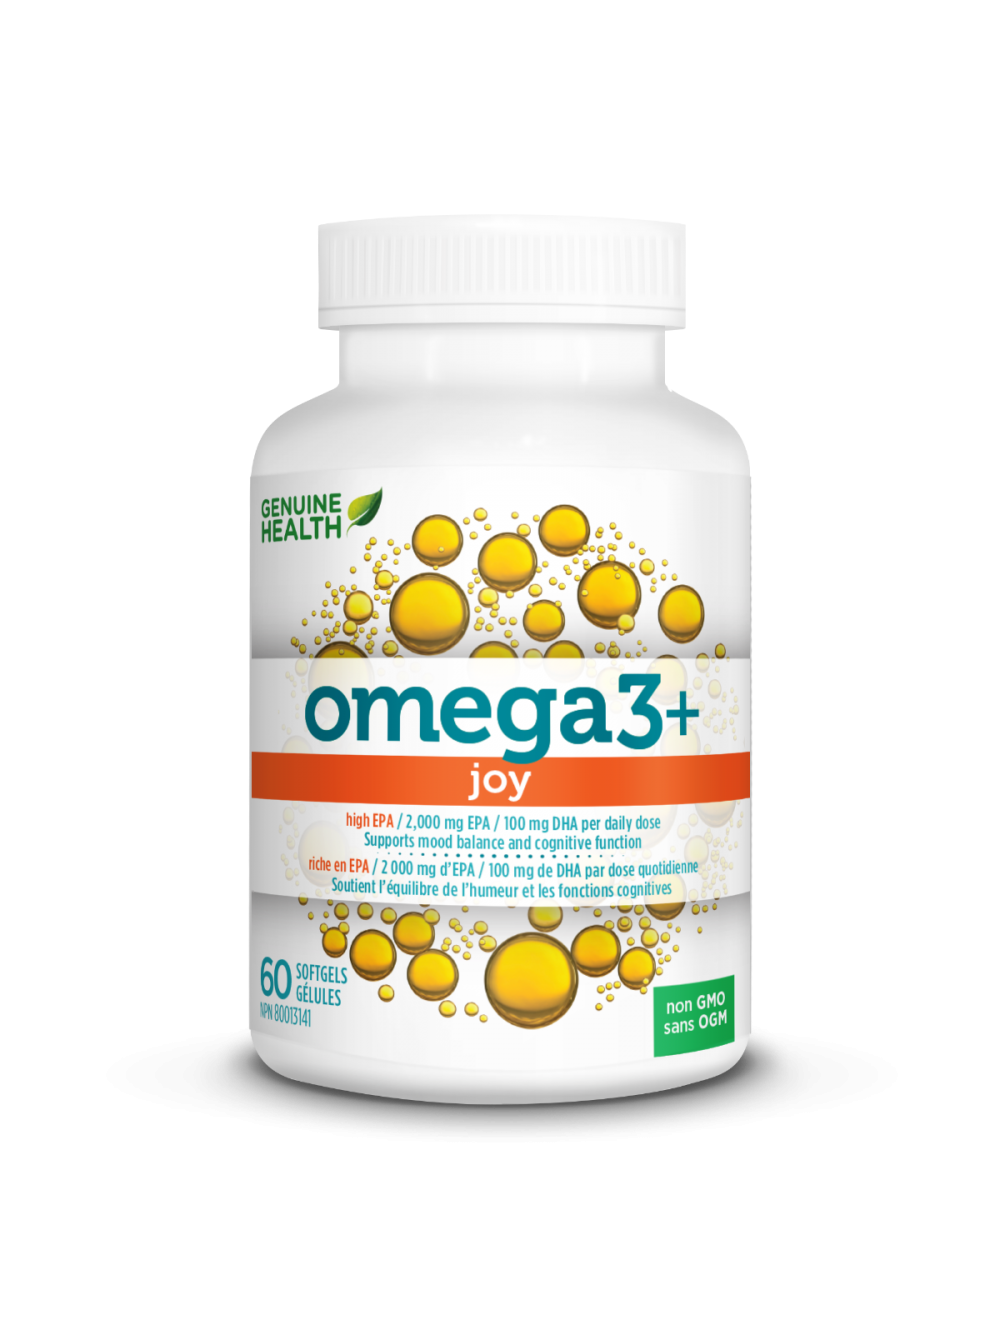 Genuine Health omega3+ JOY - capsules-2